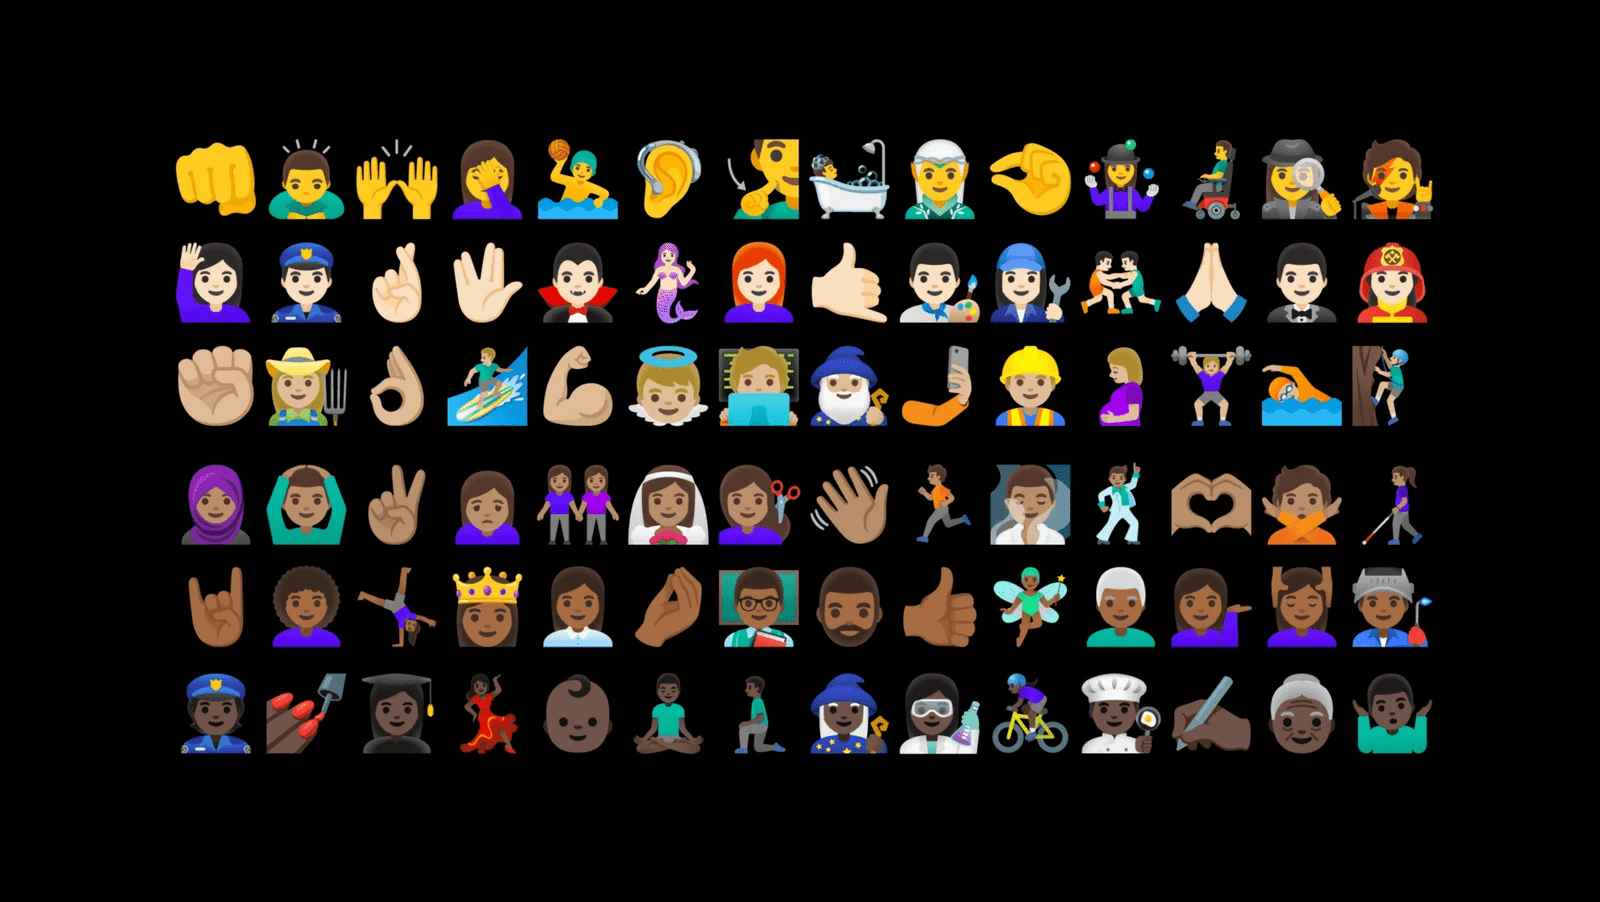 Google's emoji library